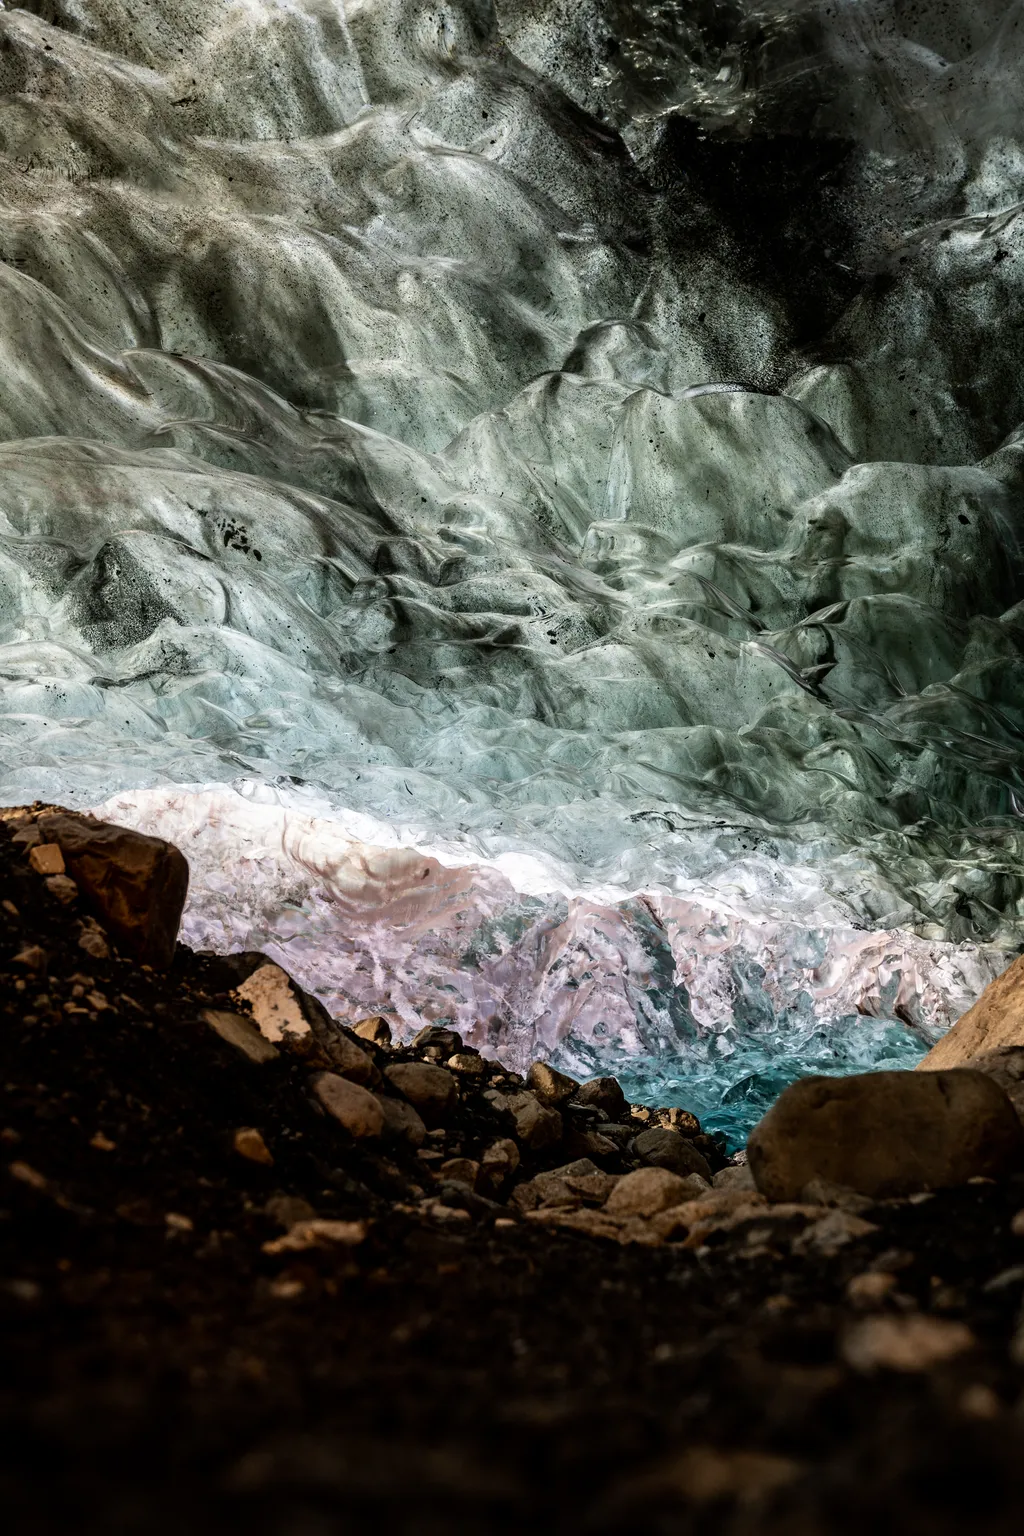 Vatnatjökull-gleccser jégbarlang Izland 